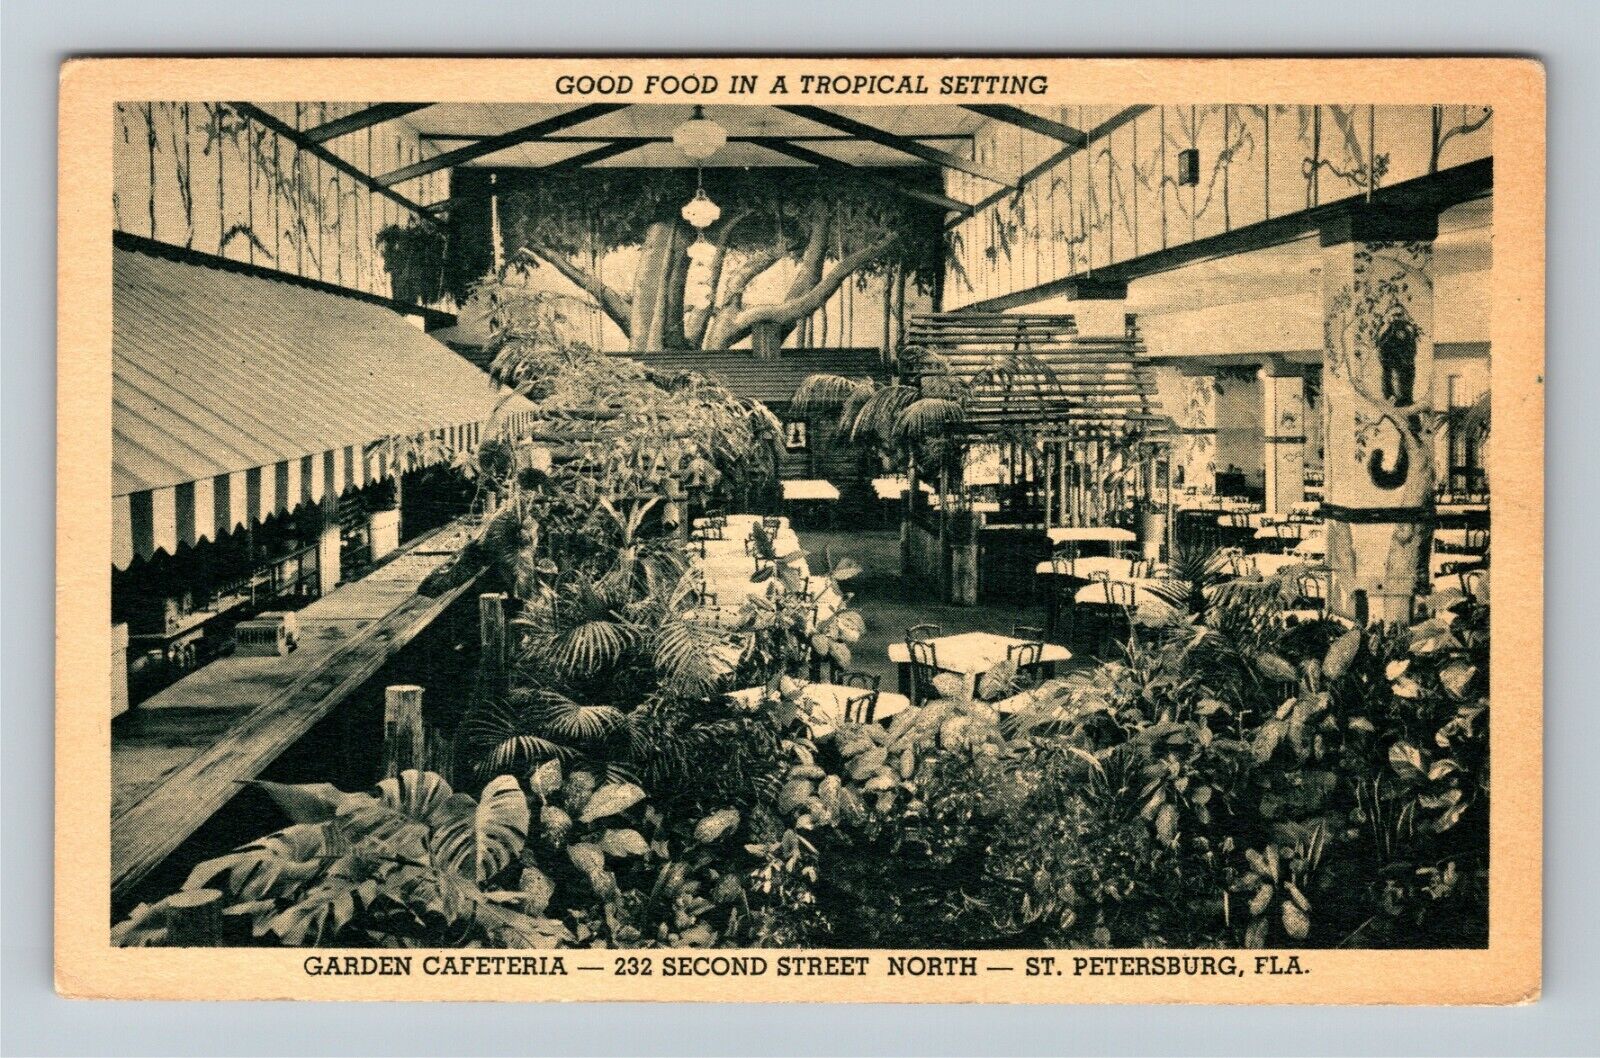 St. Petersburg FL-Florida, Tropical Garden Cafeteria Antique Vintage Postcard